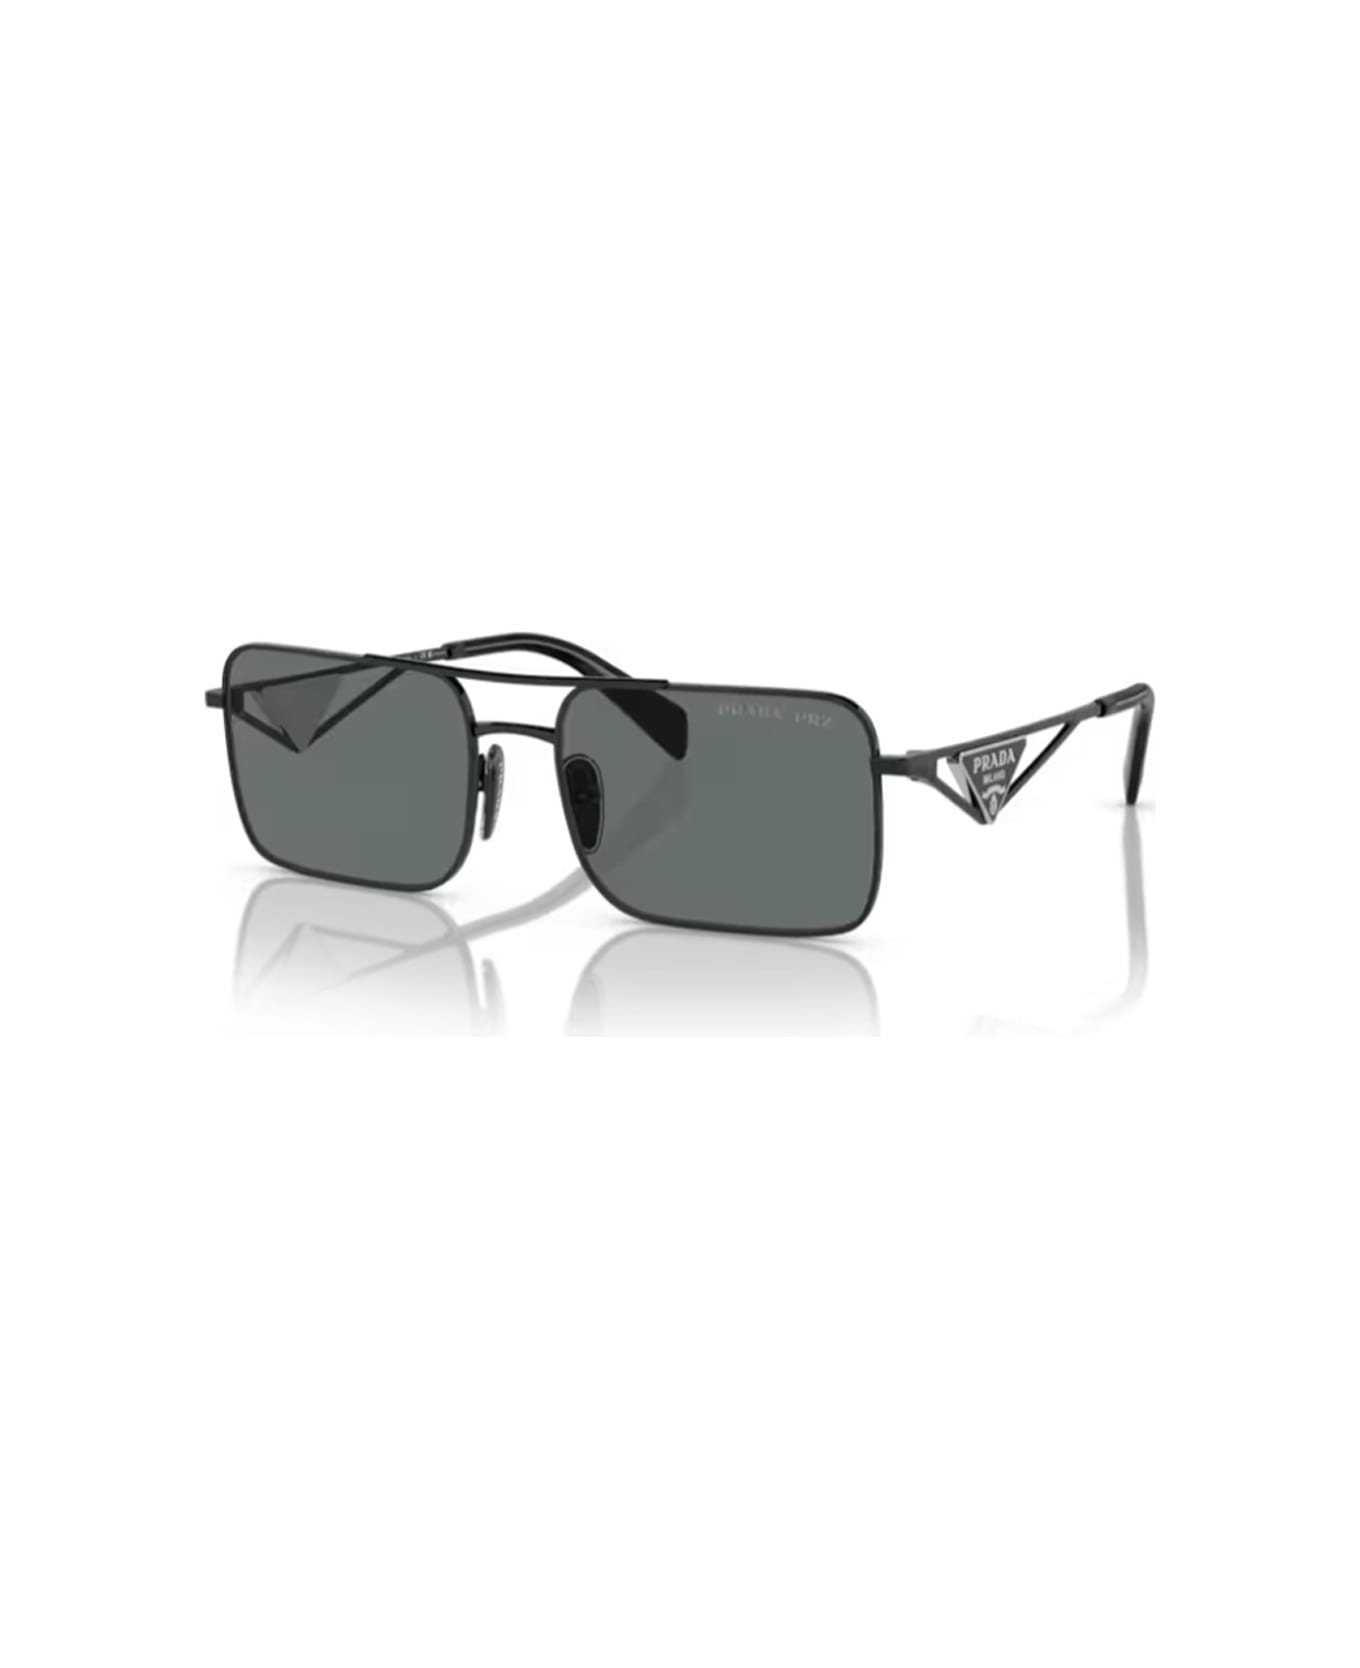 Prada Eyewear Pra52s 1ab5z1 Sunglasses - Nero